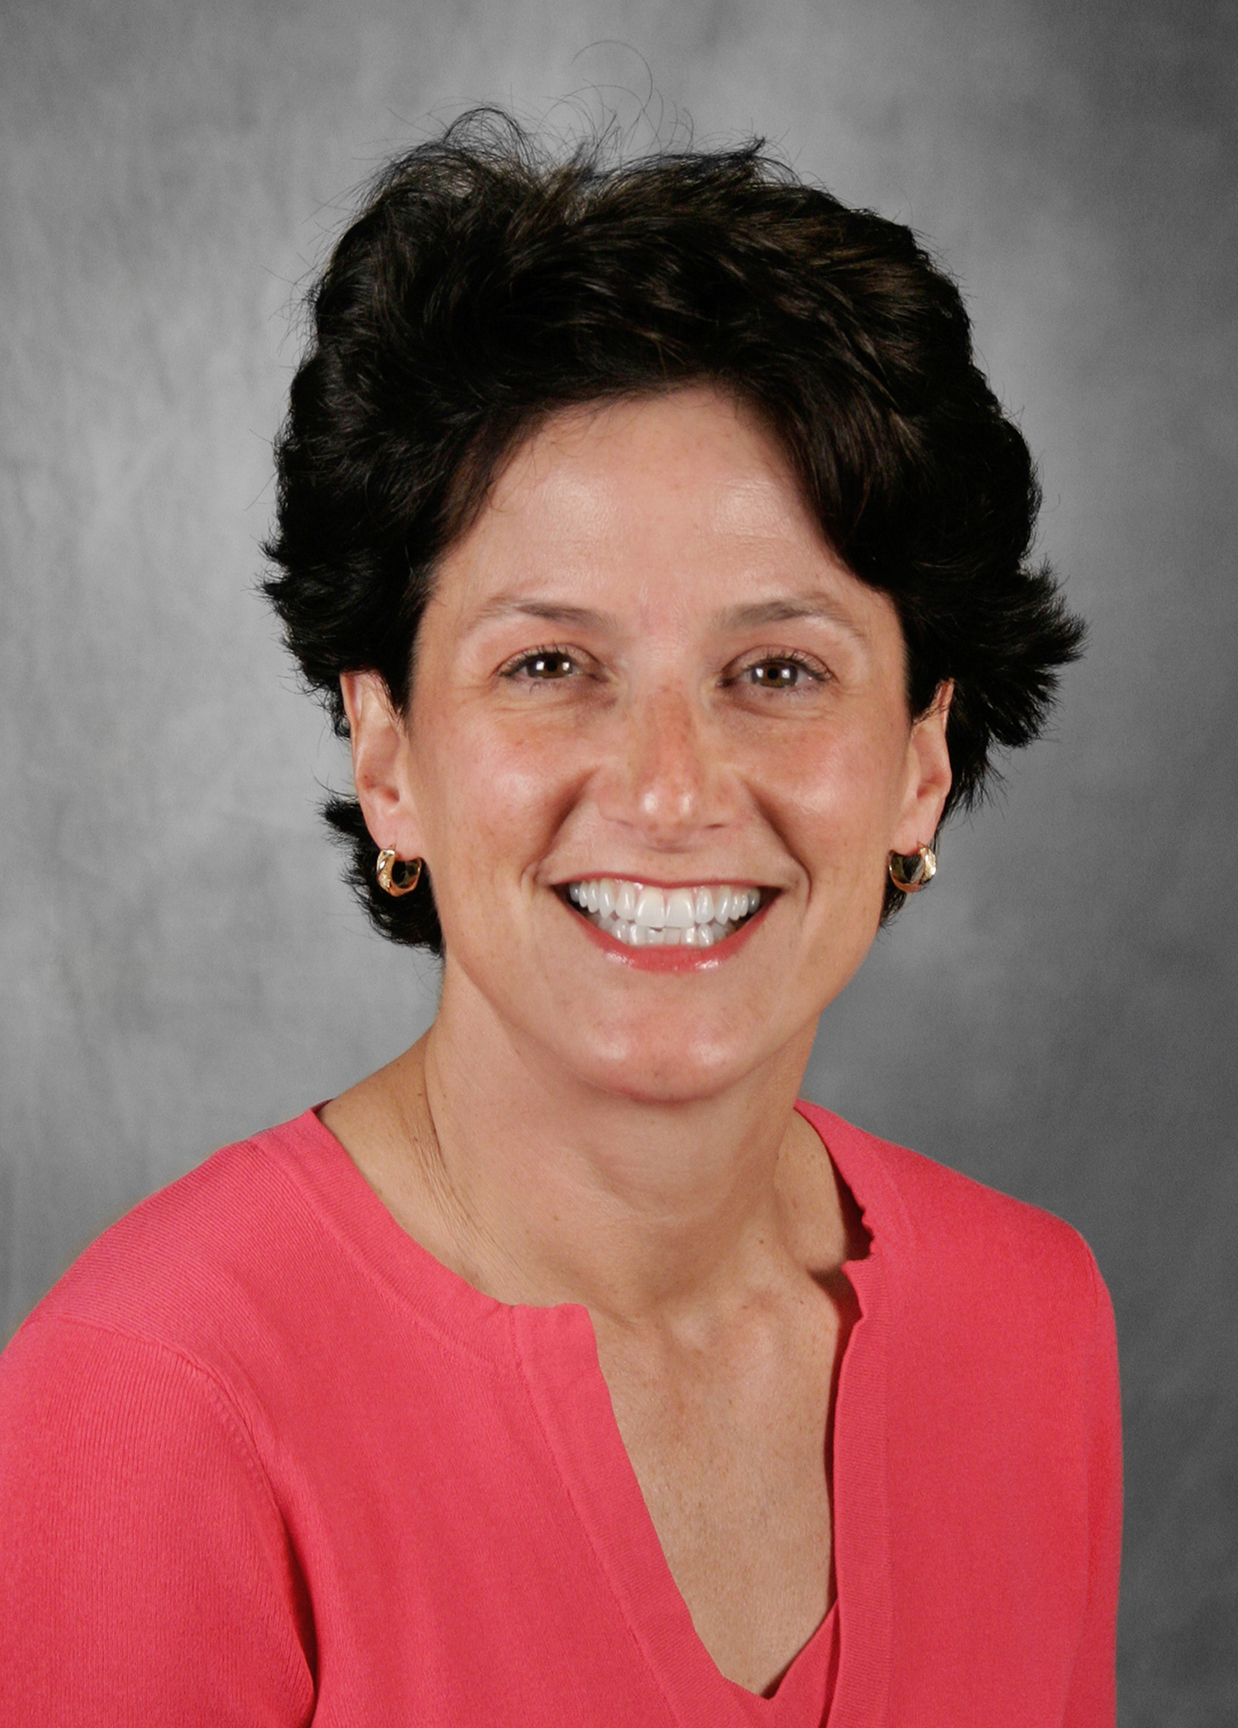 Margaret Macmillan, MD